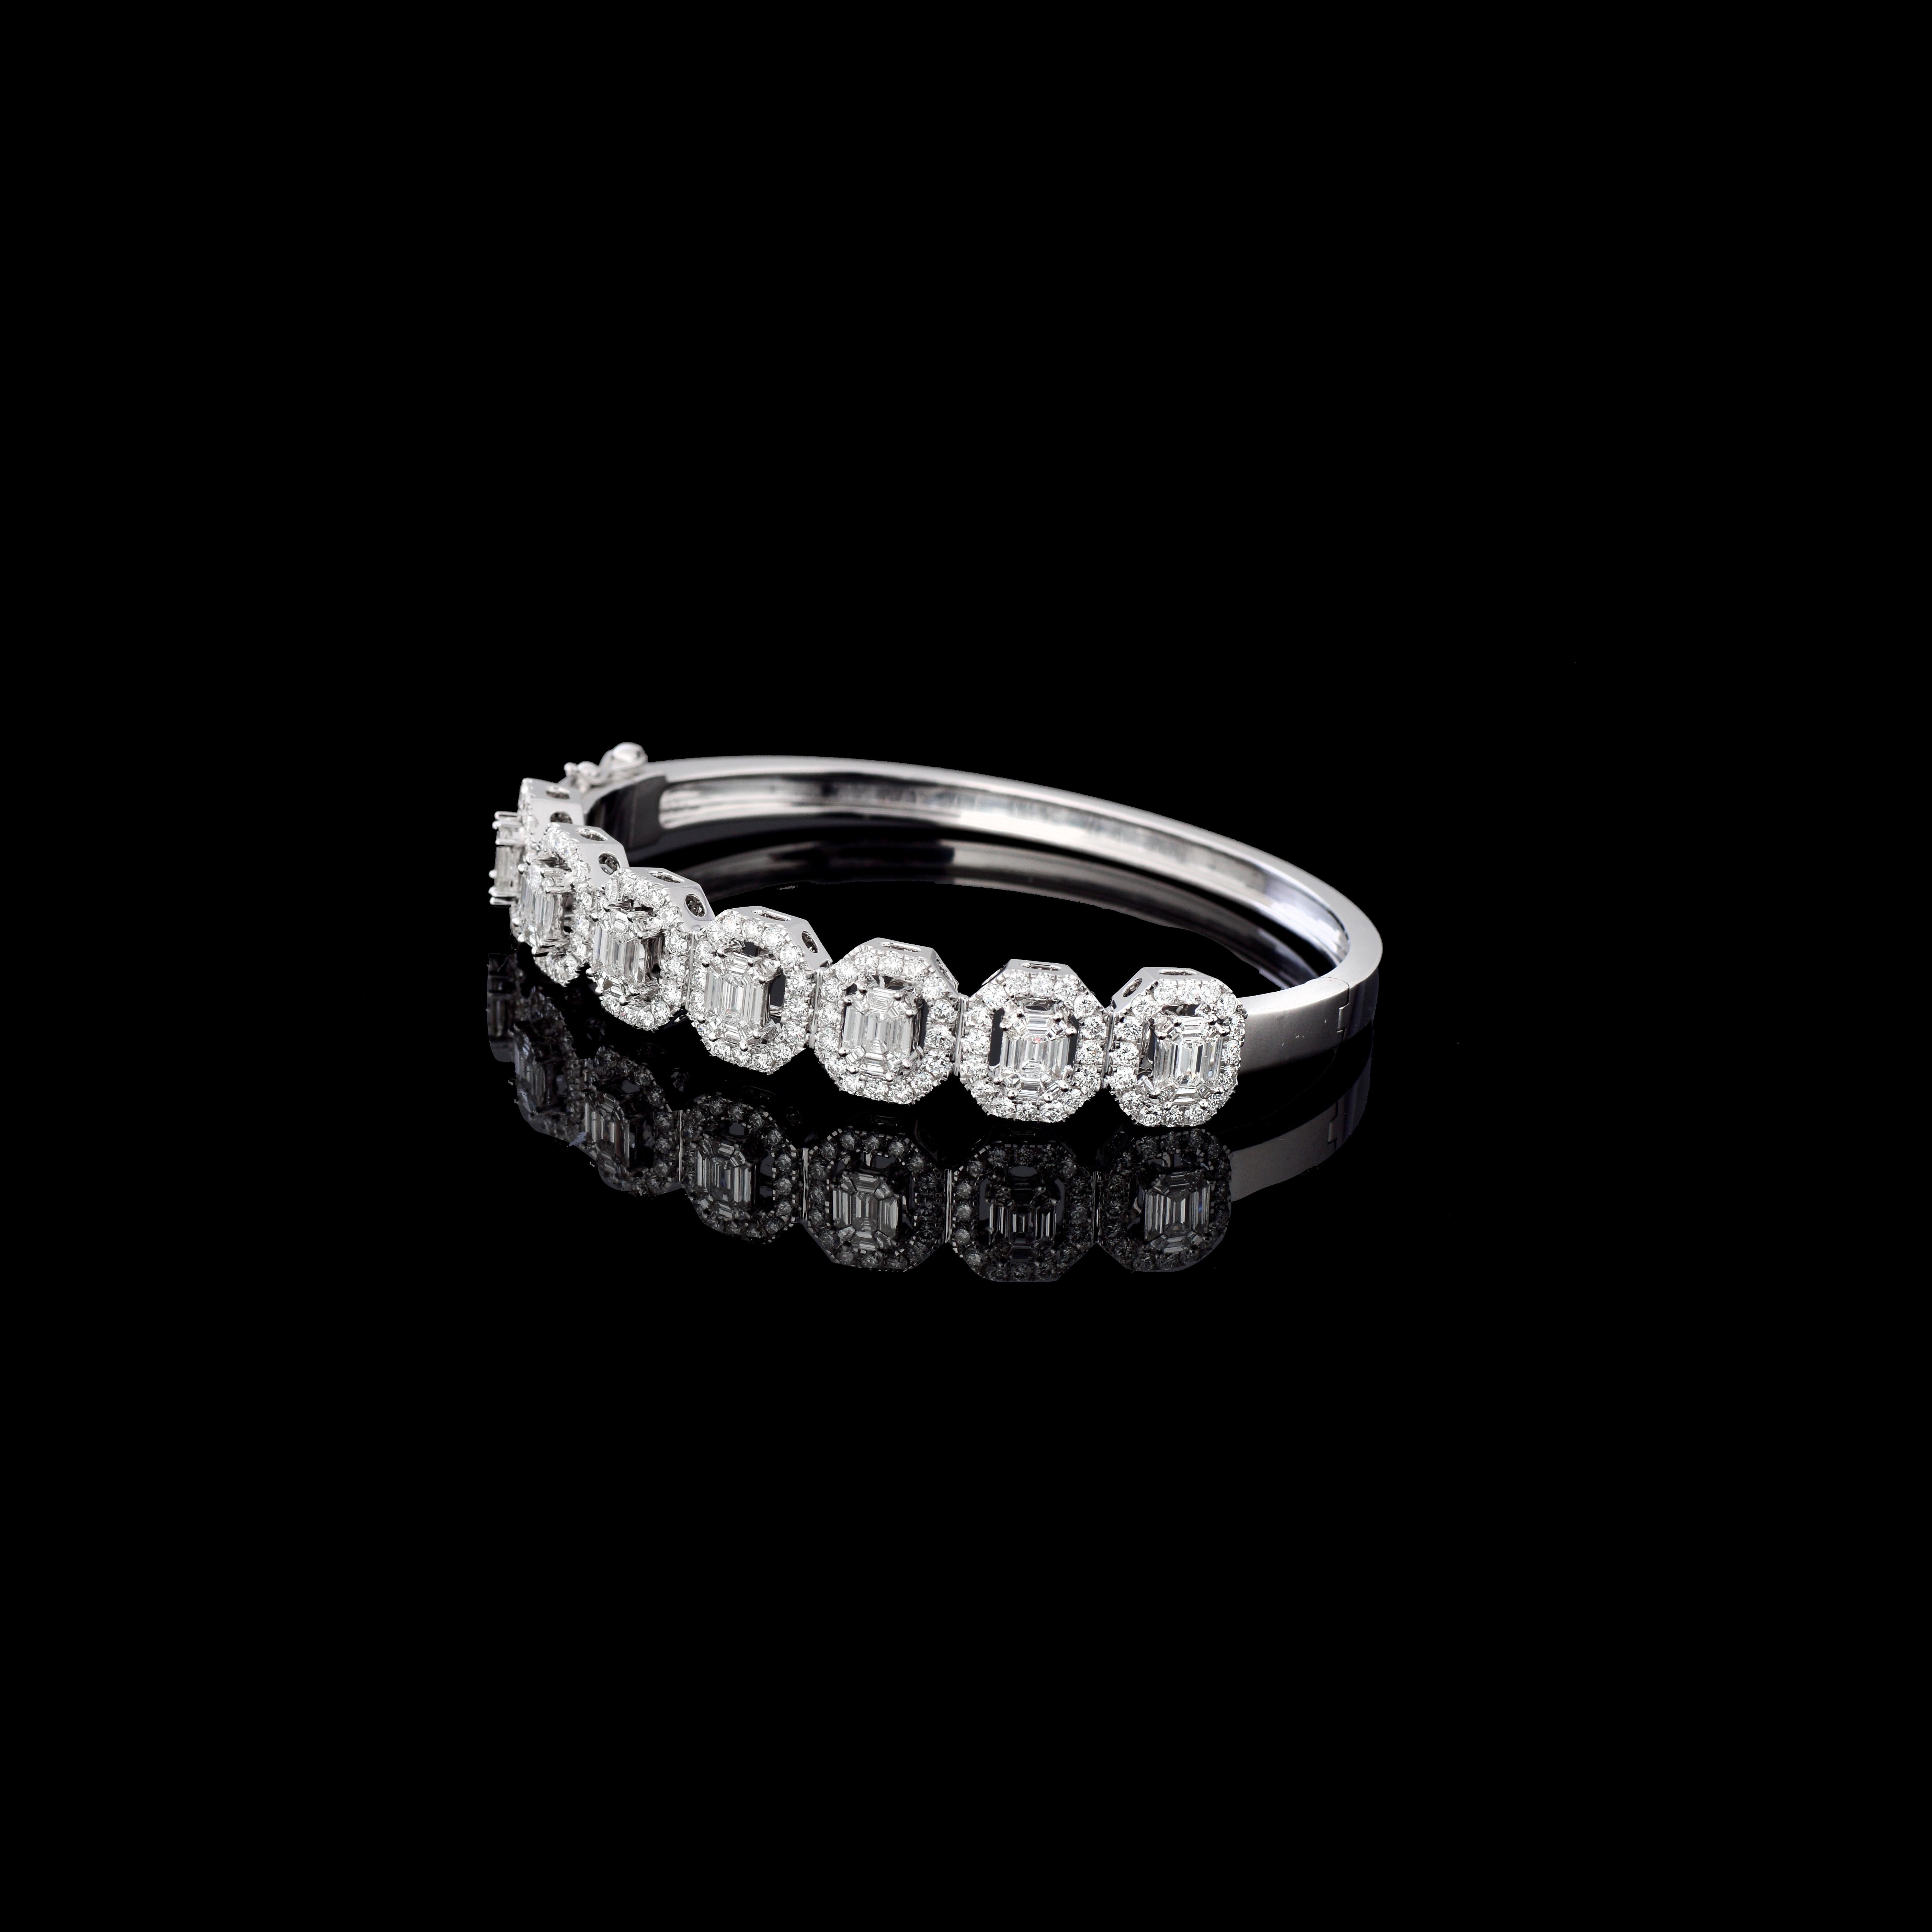 IGI 14k 3.92 Carat Diamond Antique Art Deco Bangle Bracelet For Sale 3